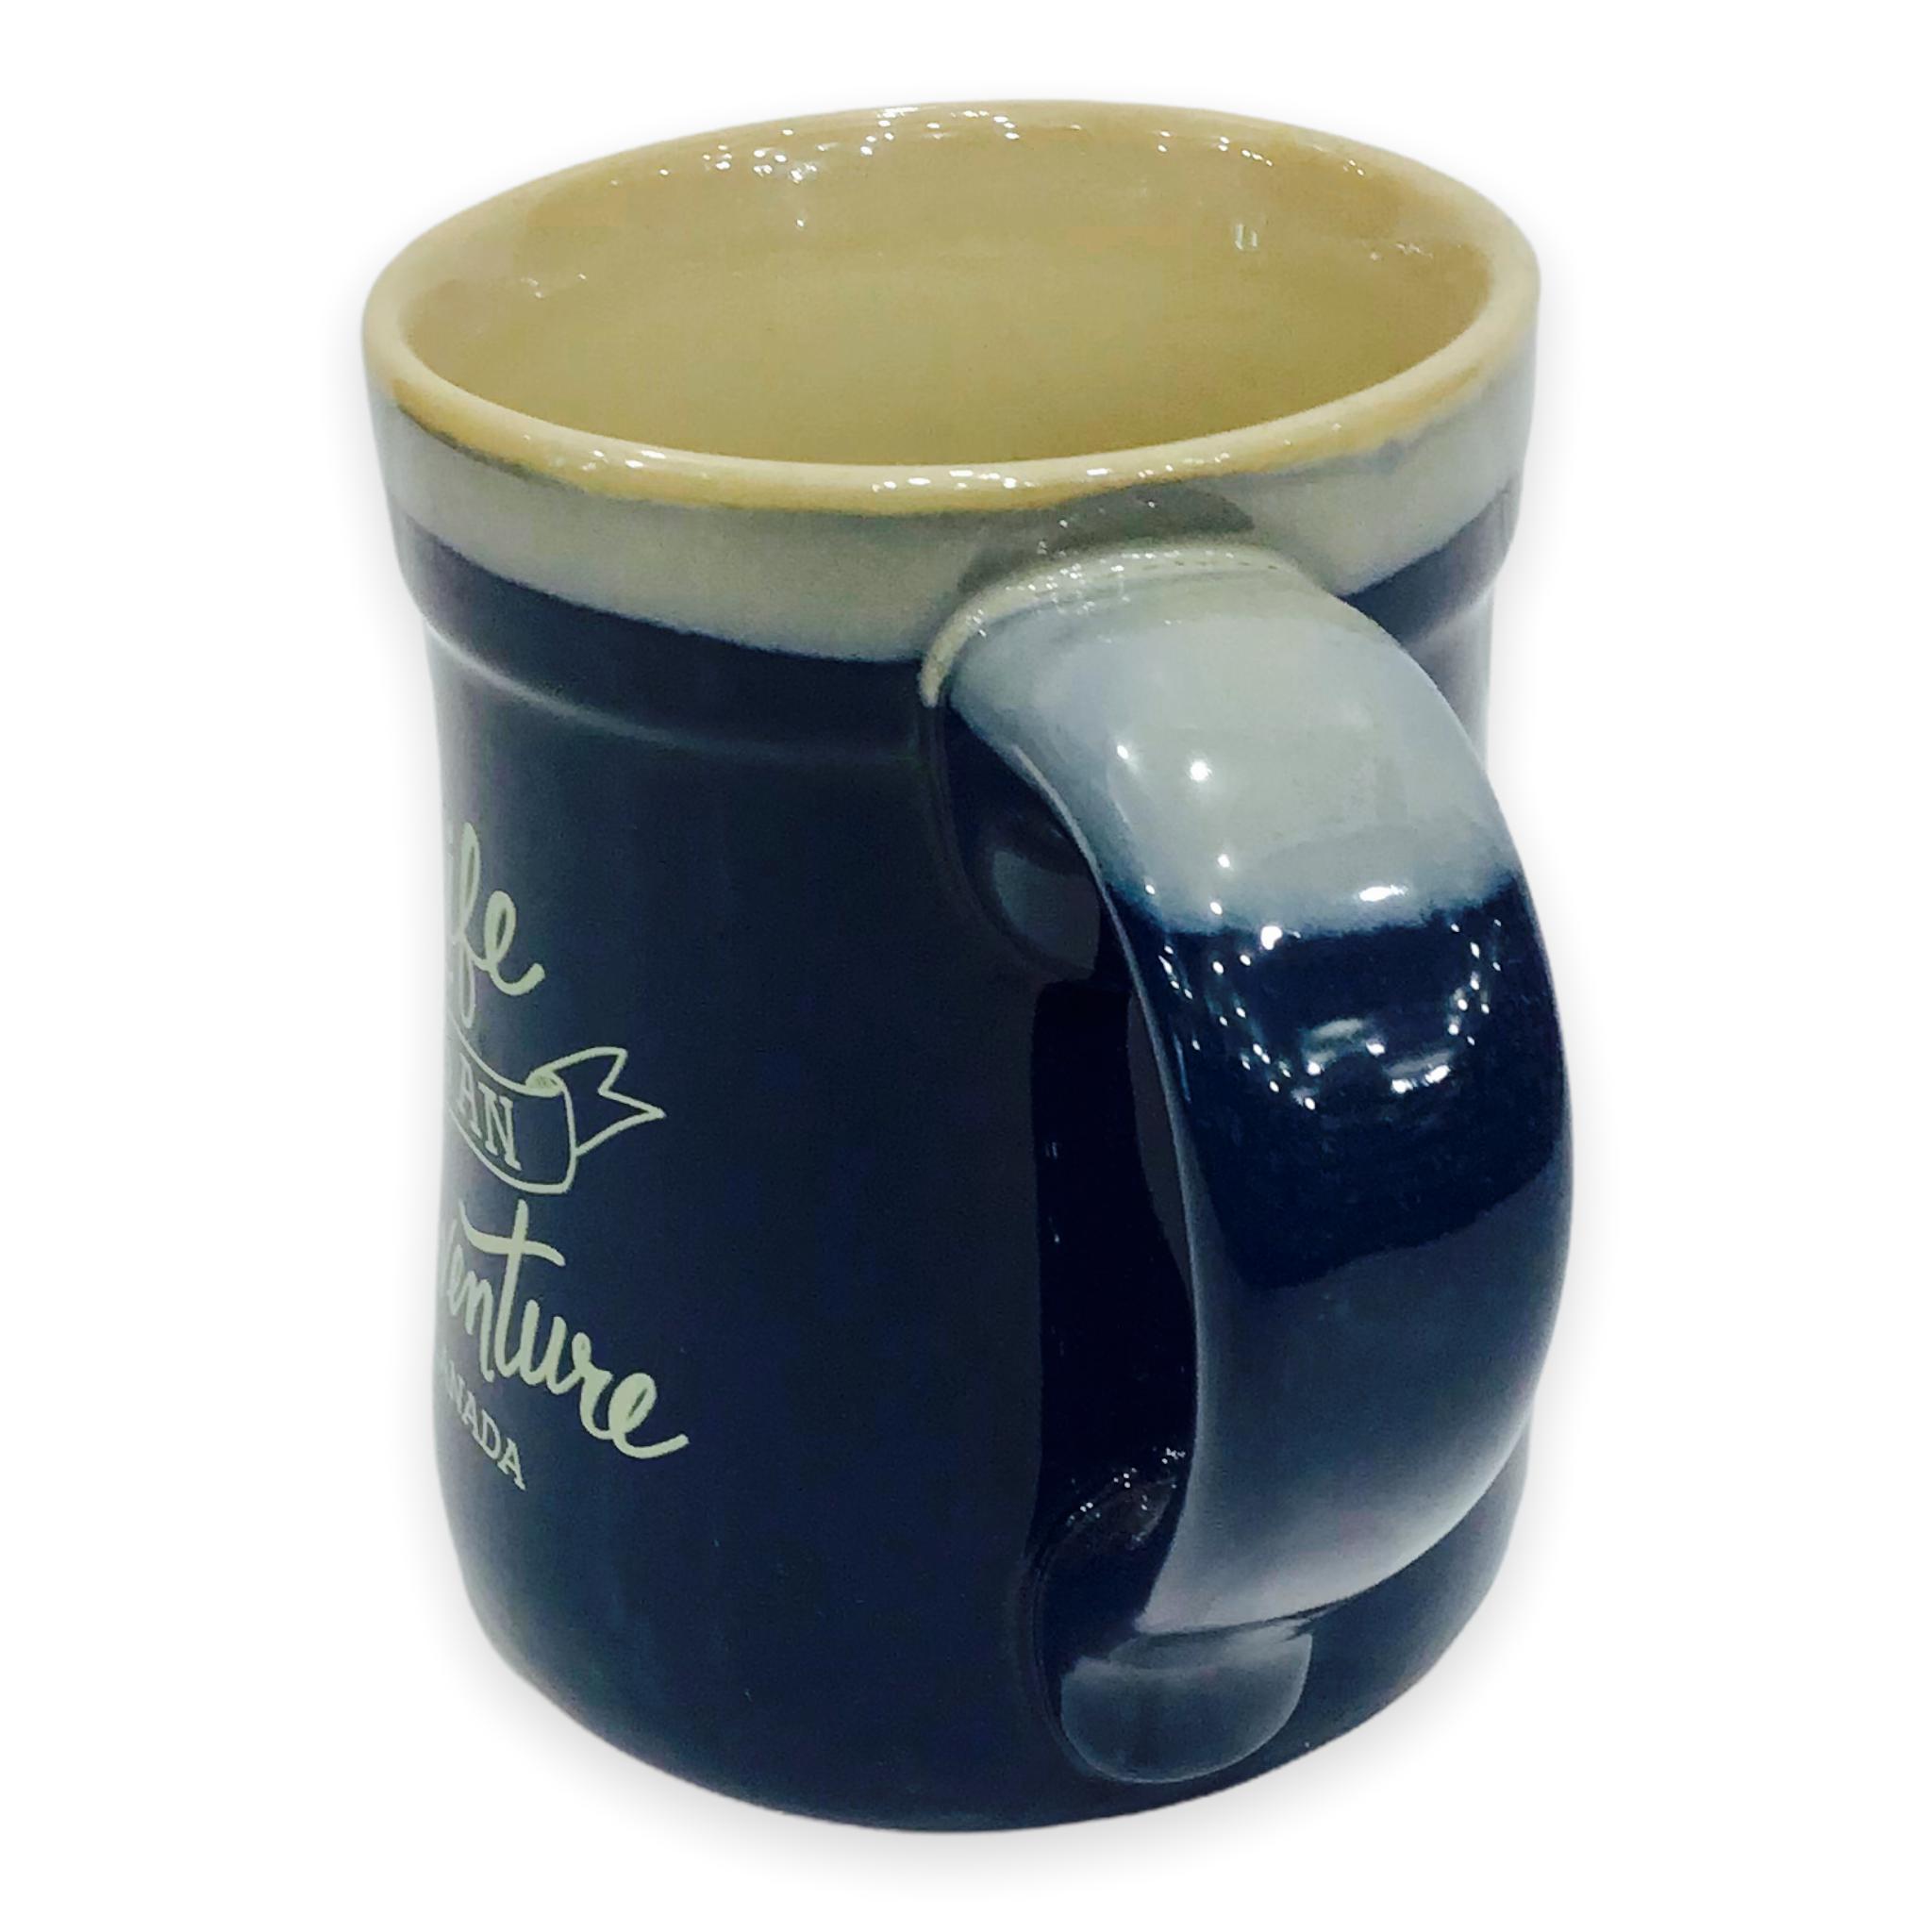 Life is an Adventure Canada 18oz Ceramic Coffee Cup | Ceramic Novelty Coffee Mug | Unique Coffee Mug | Large Coffee Mug | Jumbo Coffee Mug | Souvenir Coffee Mug (Life Adventure)